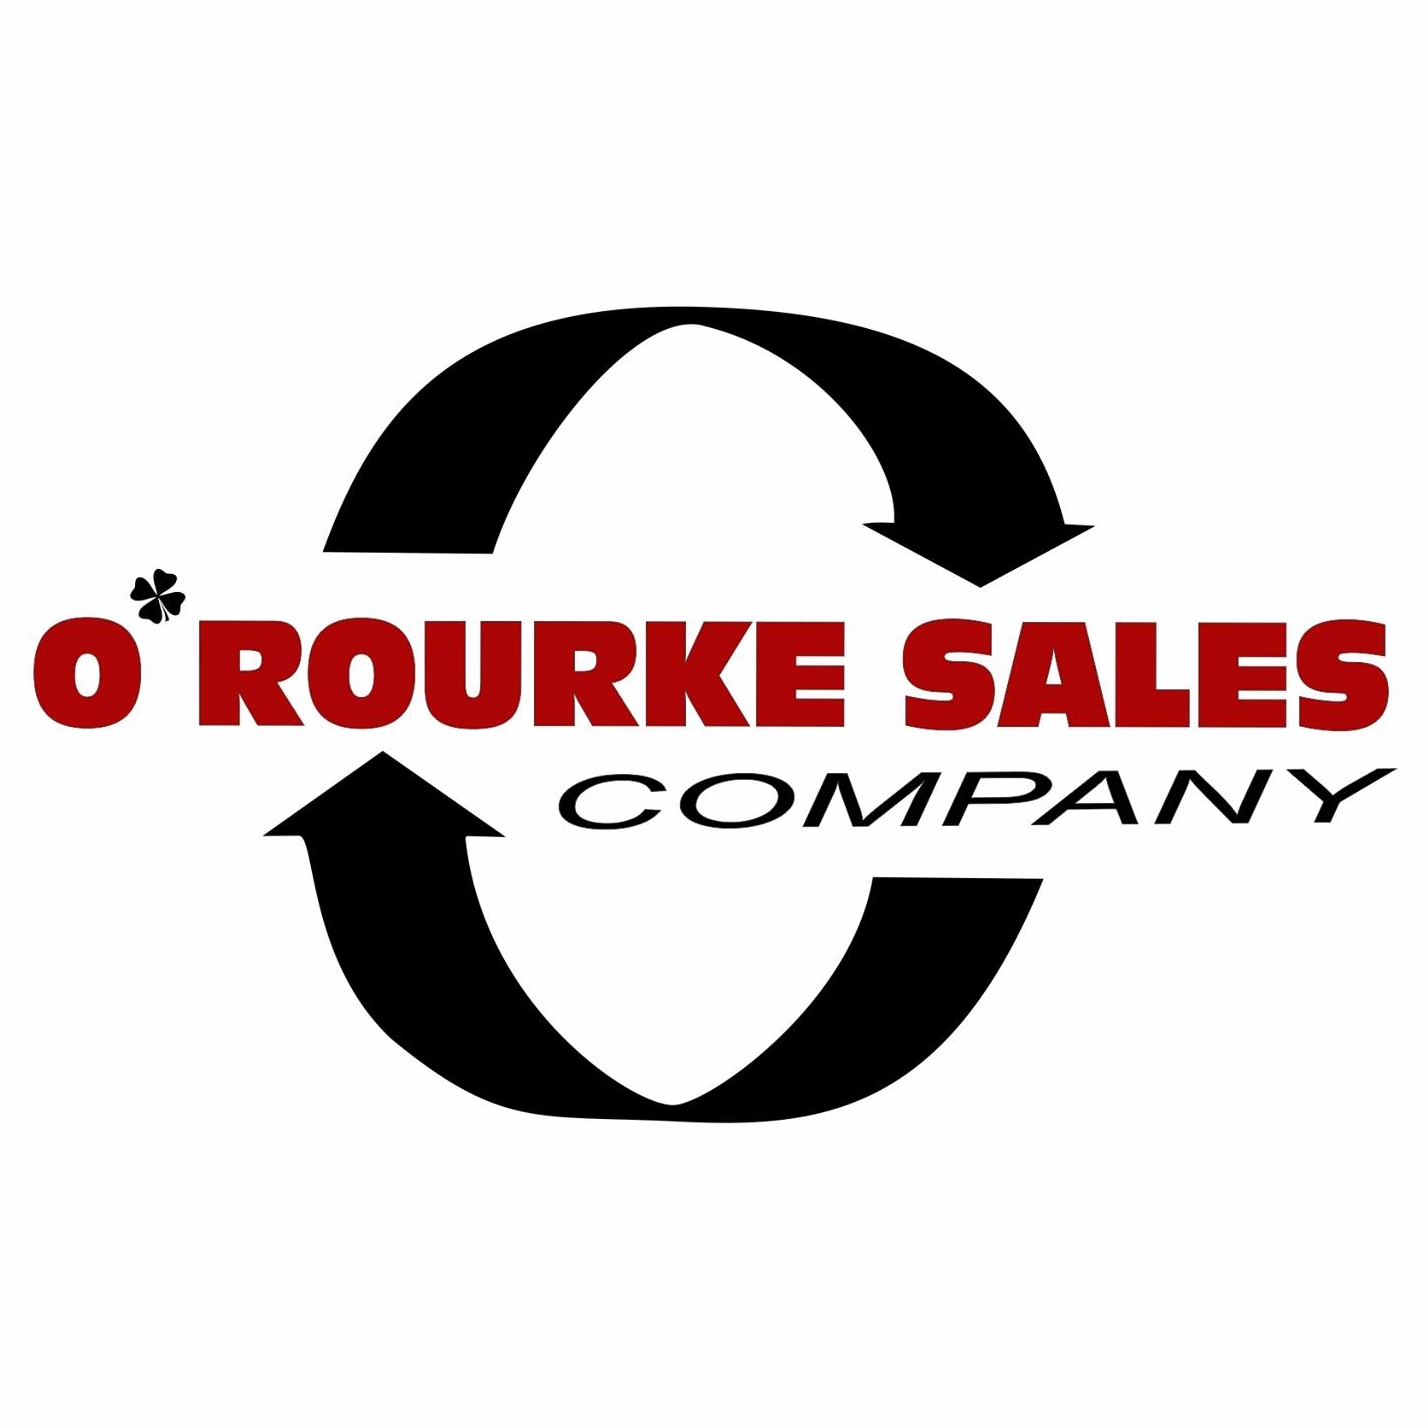 O'Rourke Sales